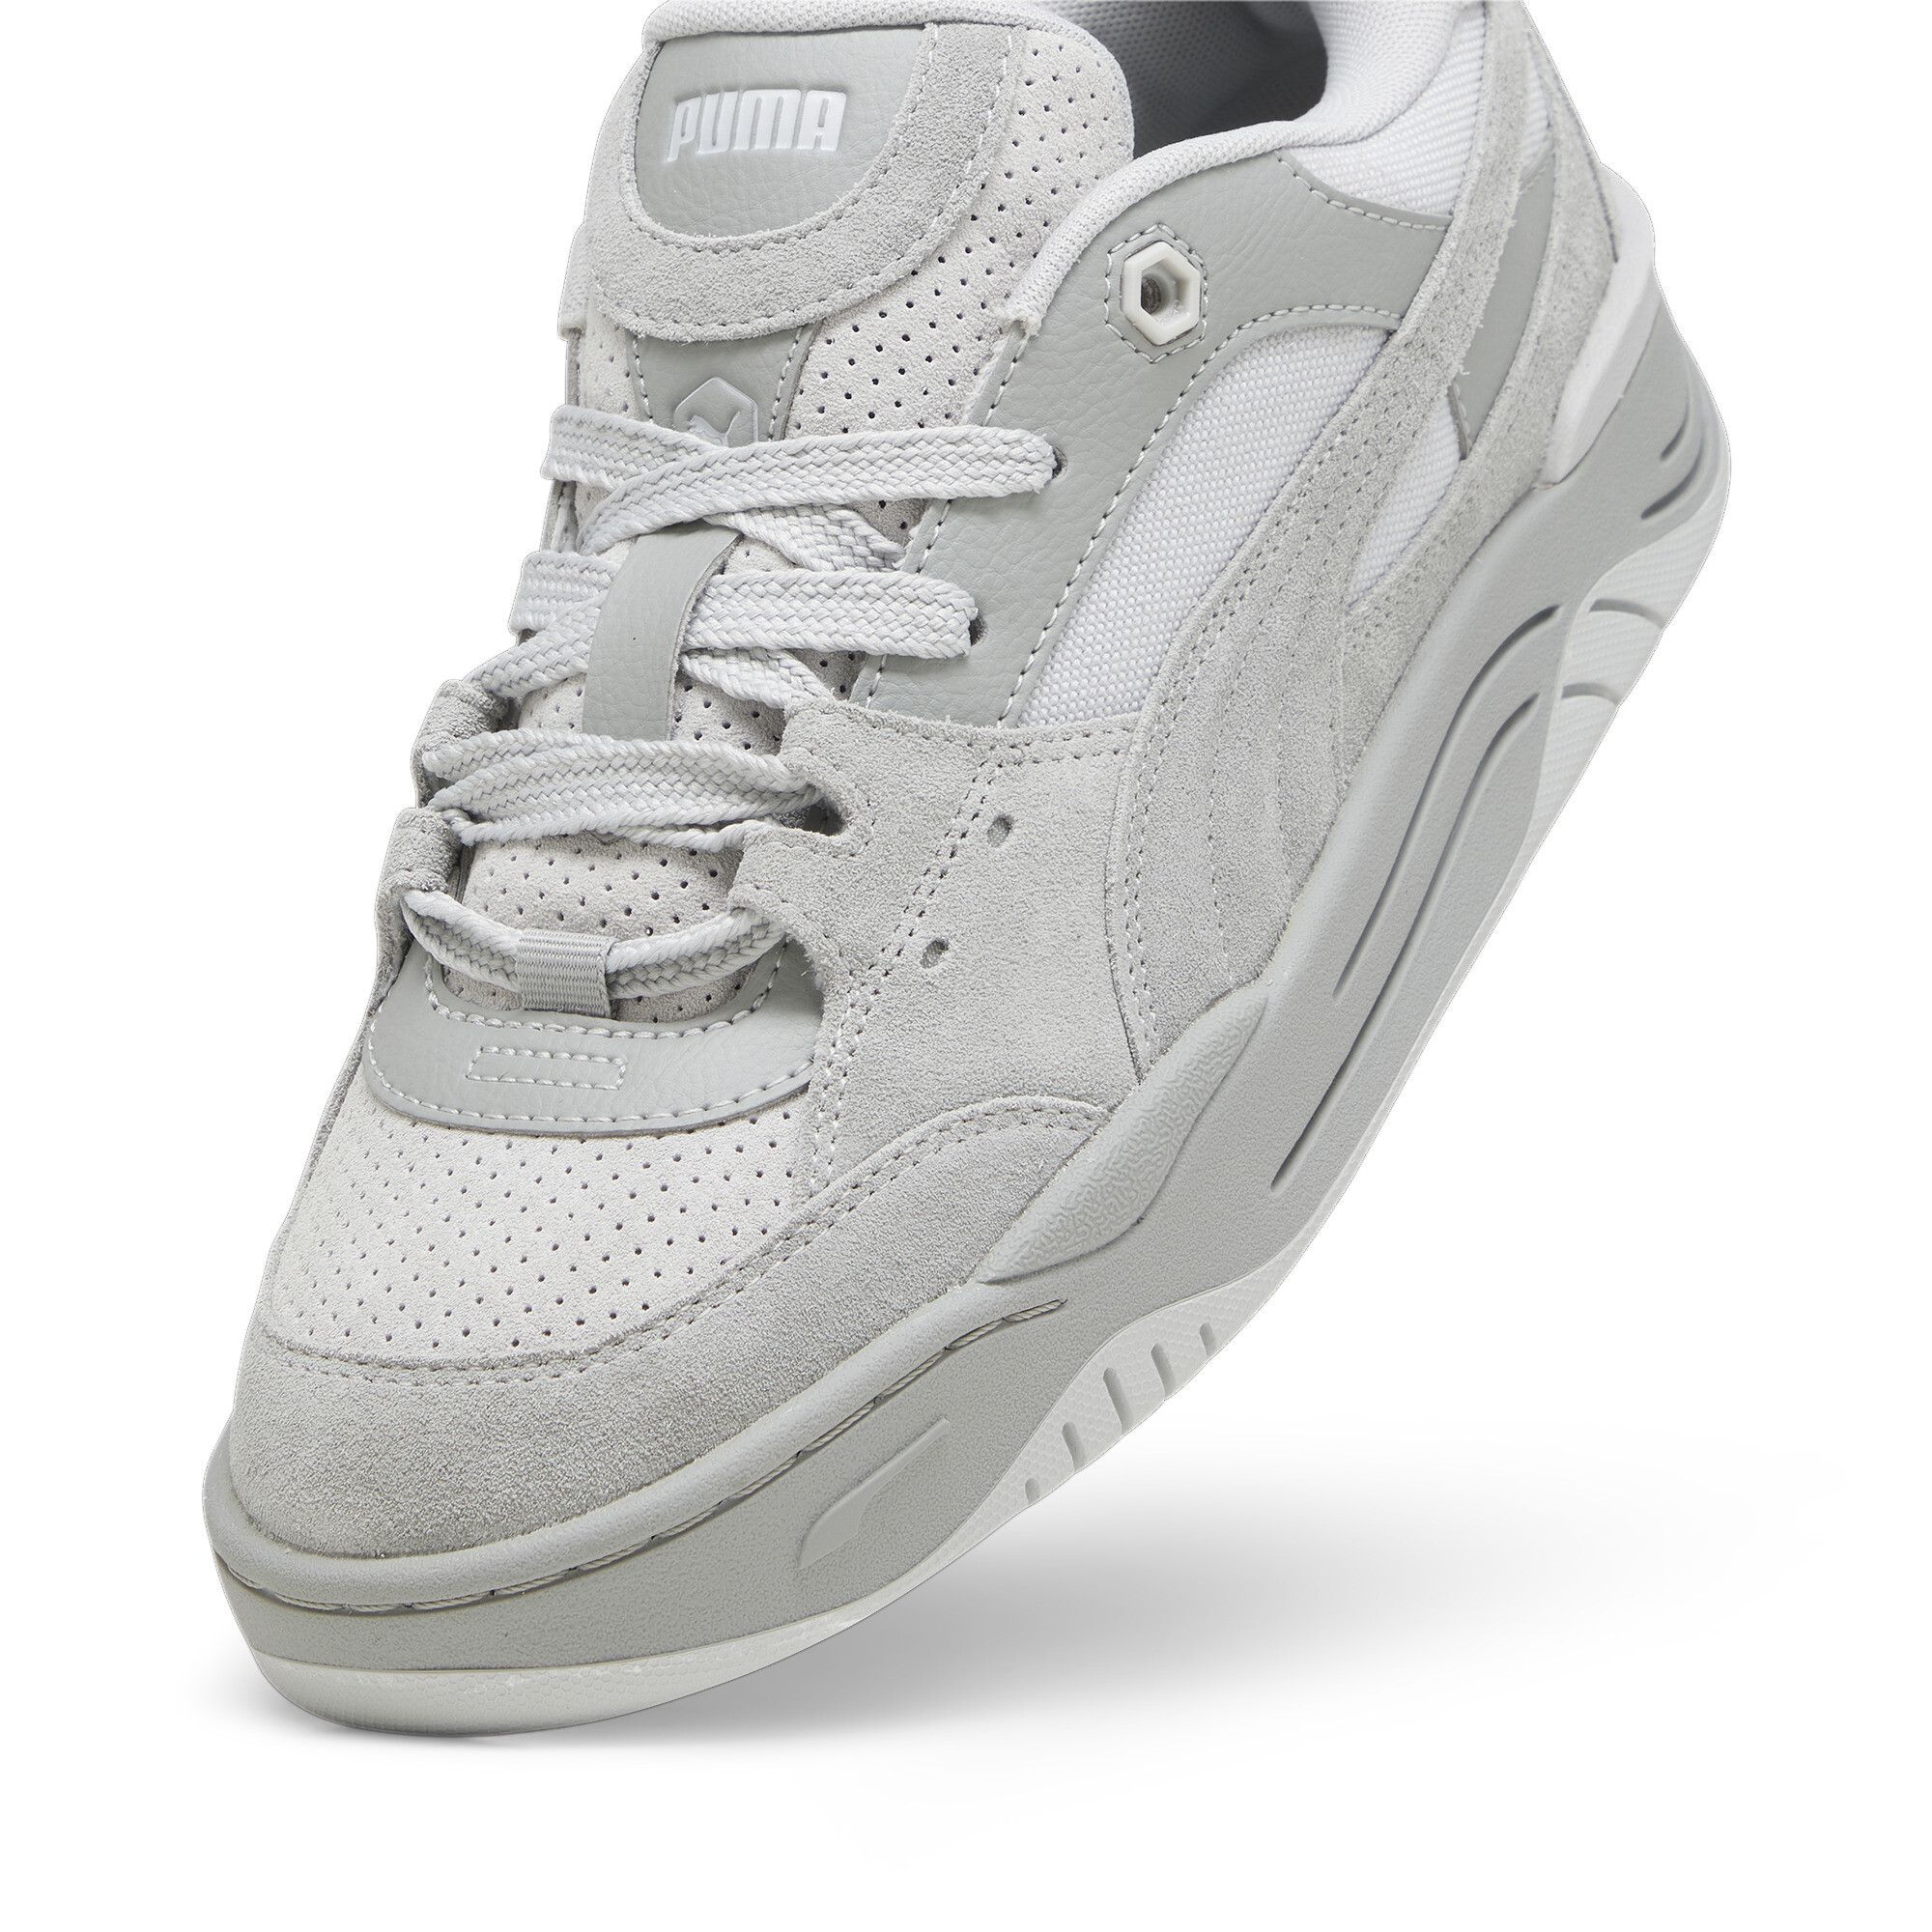 Men's Puma-180 Perf Sneakers In Gray, Size EU 42